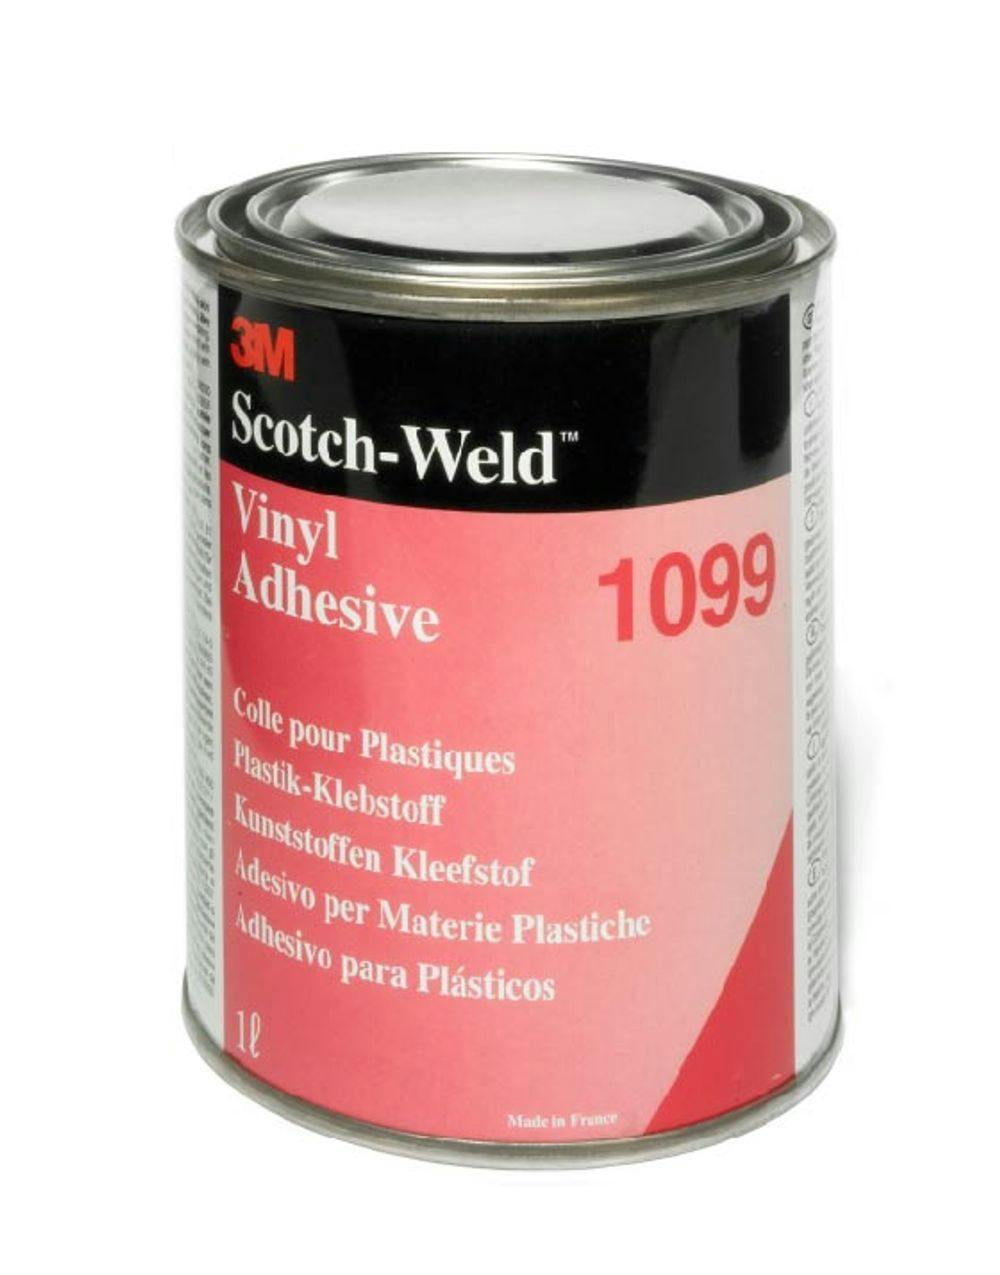 3M™ Scotch-Weld™ high performance plastic adhesive 1099